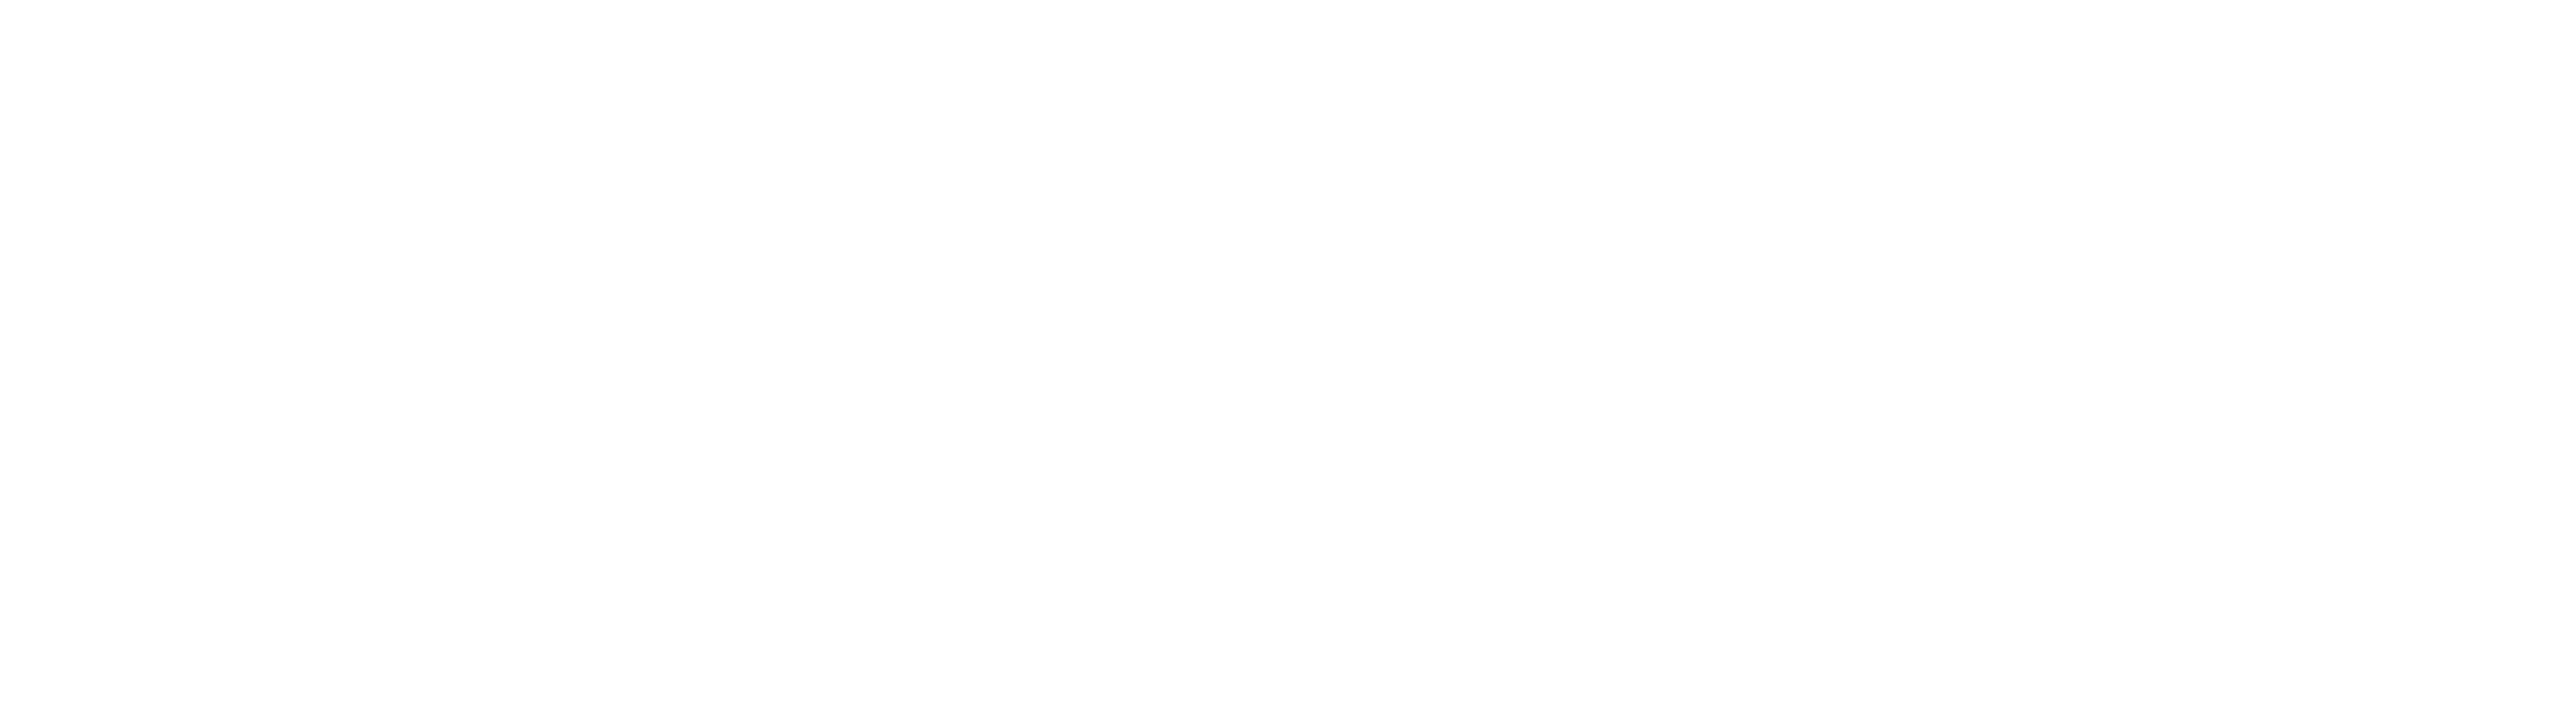 Logo de los fondos NextGenerationEU